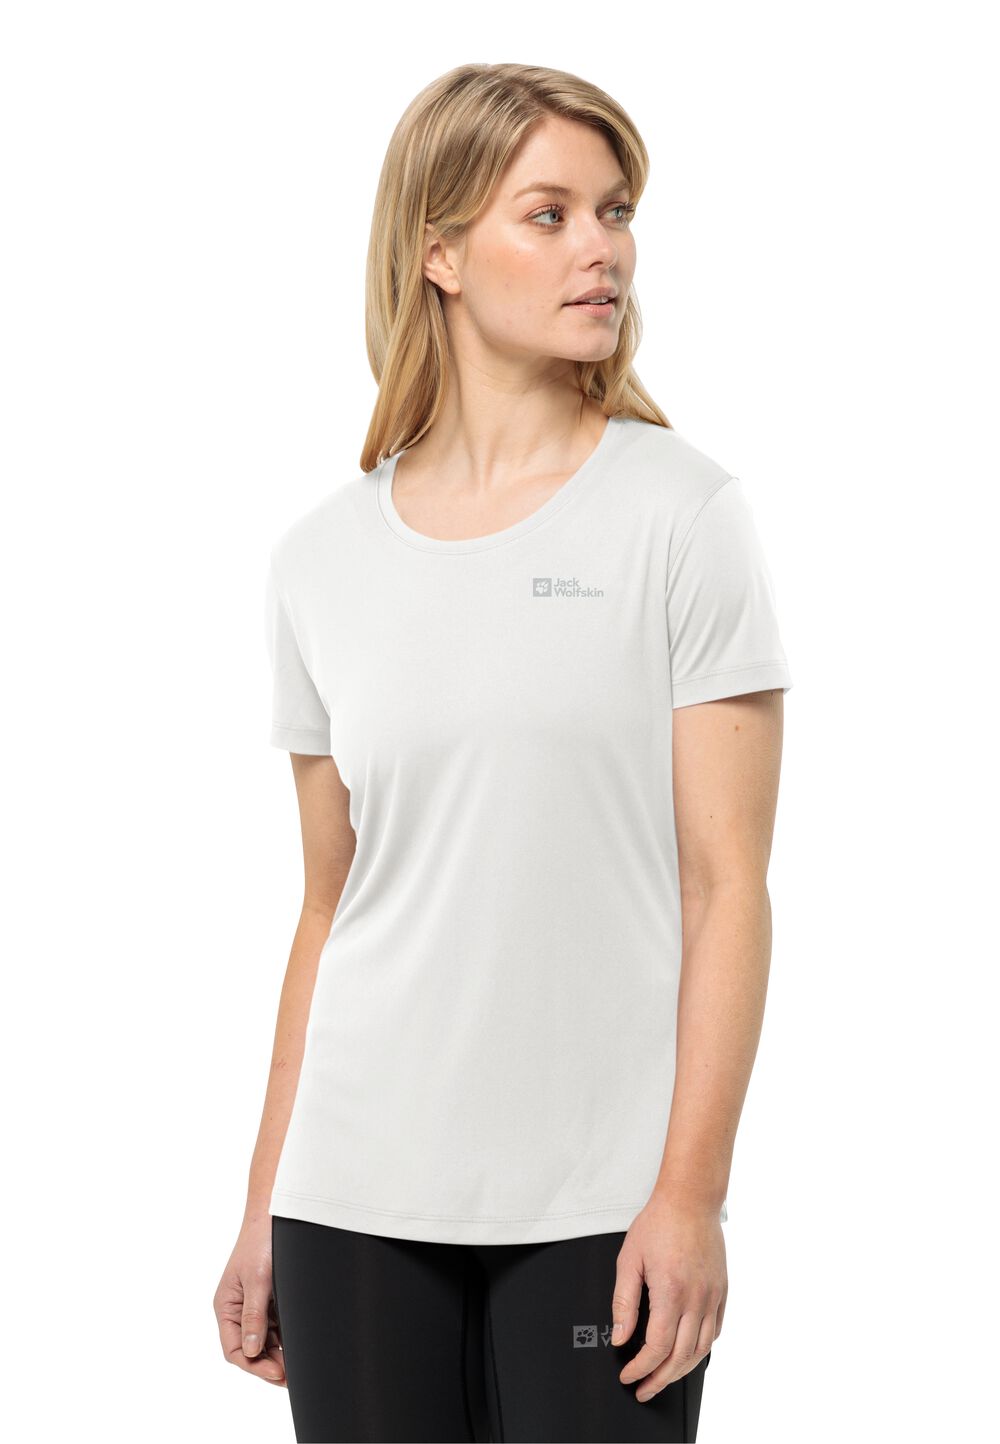 Jack Wolfskin Tech T-Shirt Women Functioneel shirt Dames XL wit stark white